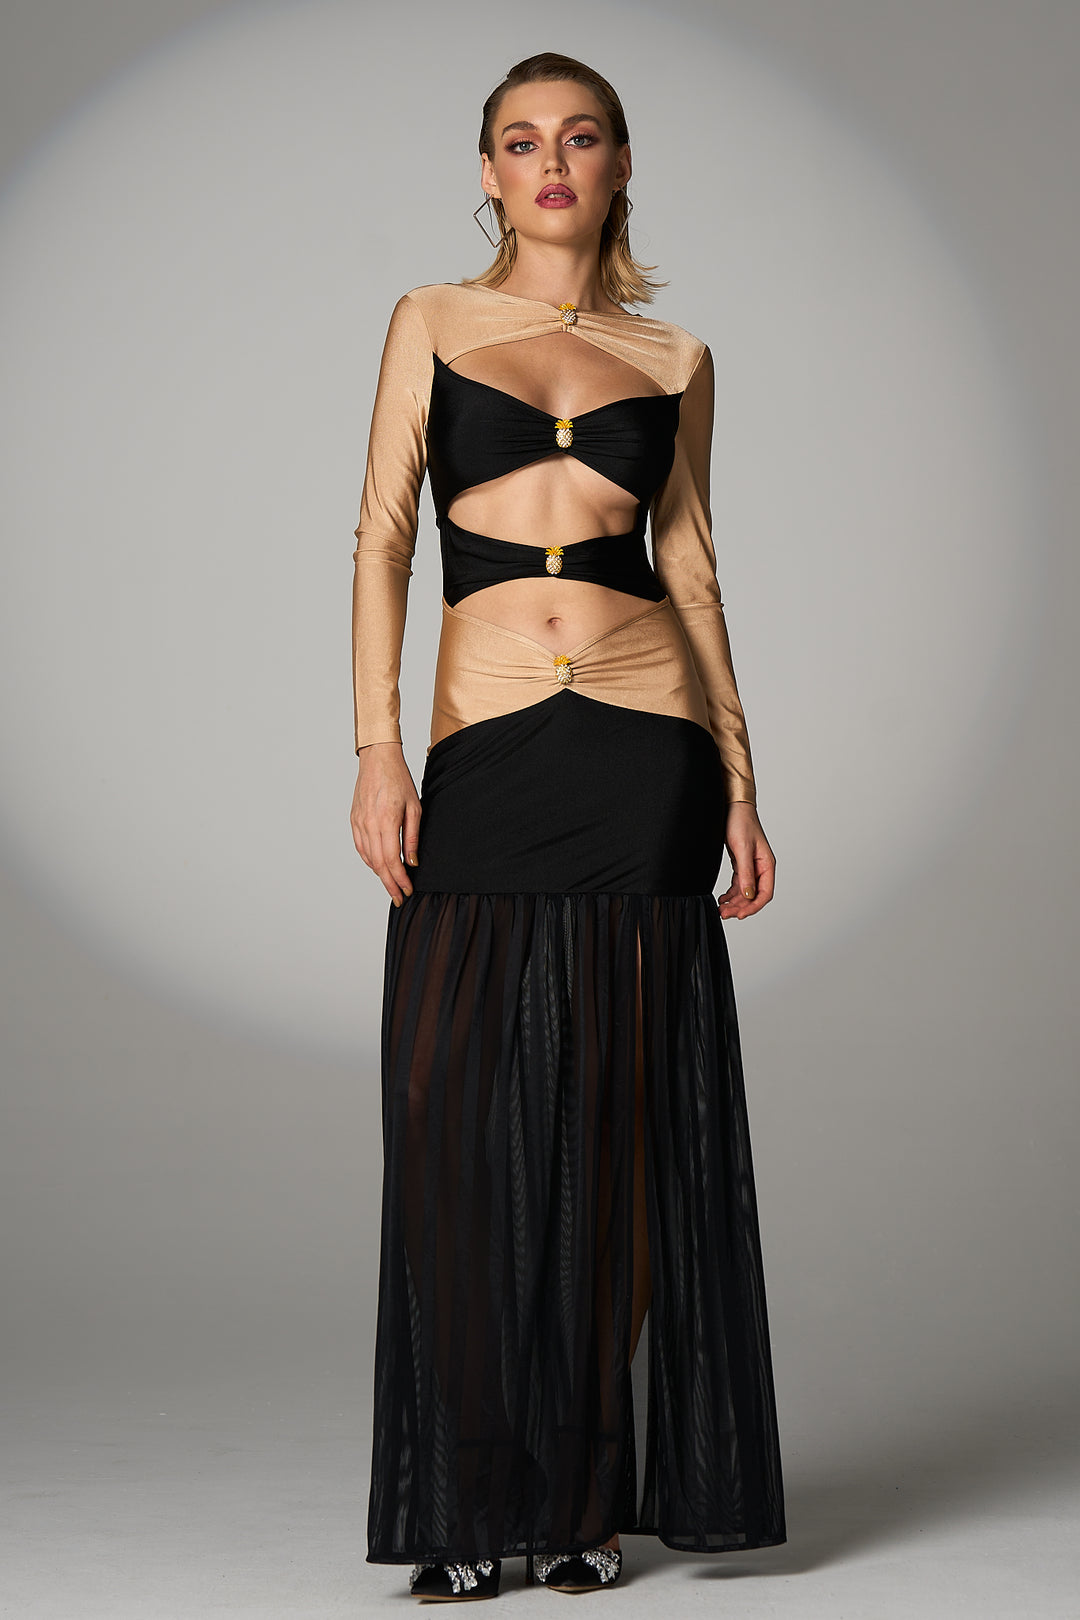 Sesidy Artemis Hollow Corset Maxi Dress in Black